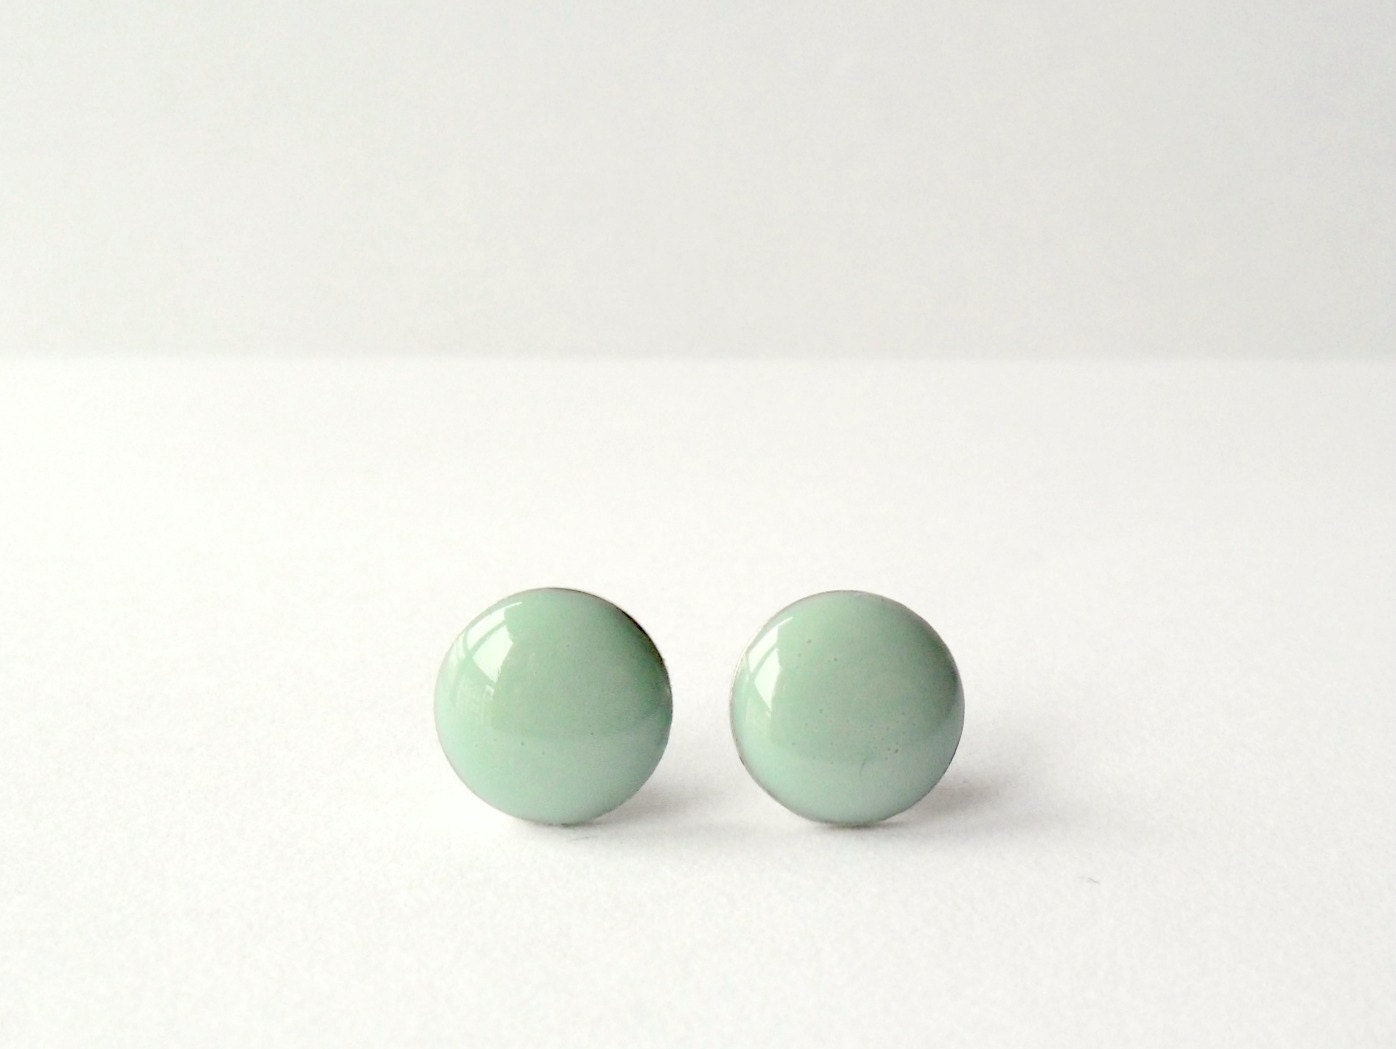 Mint green studs, pastel round earrings, resin post earrings, simple jewelry - ThePurpleBalloon